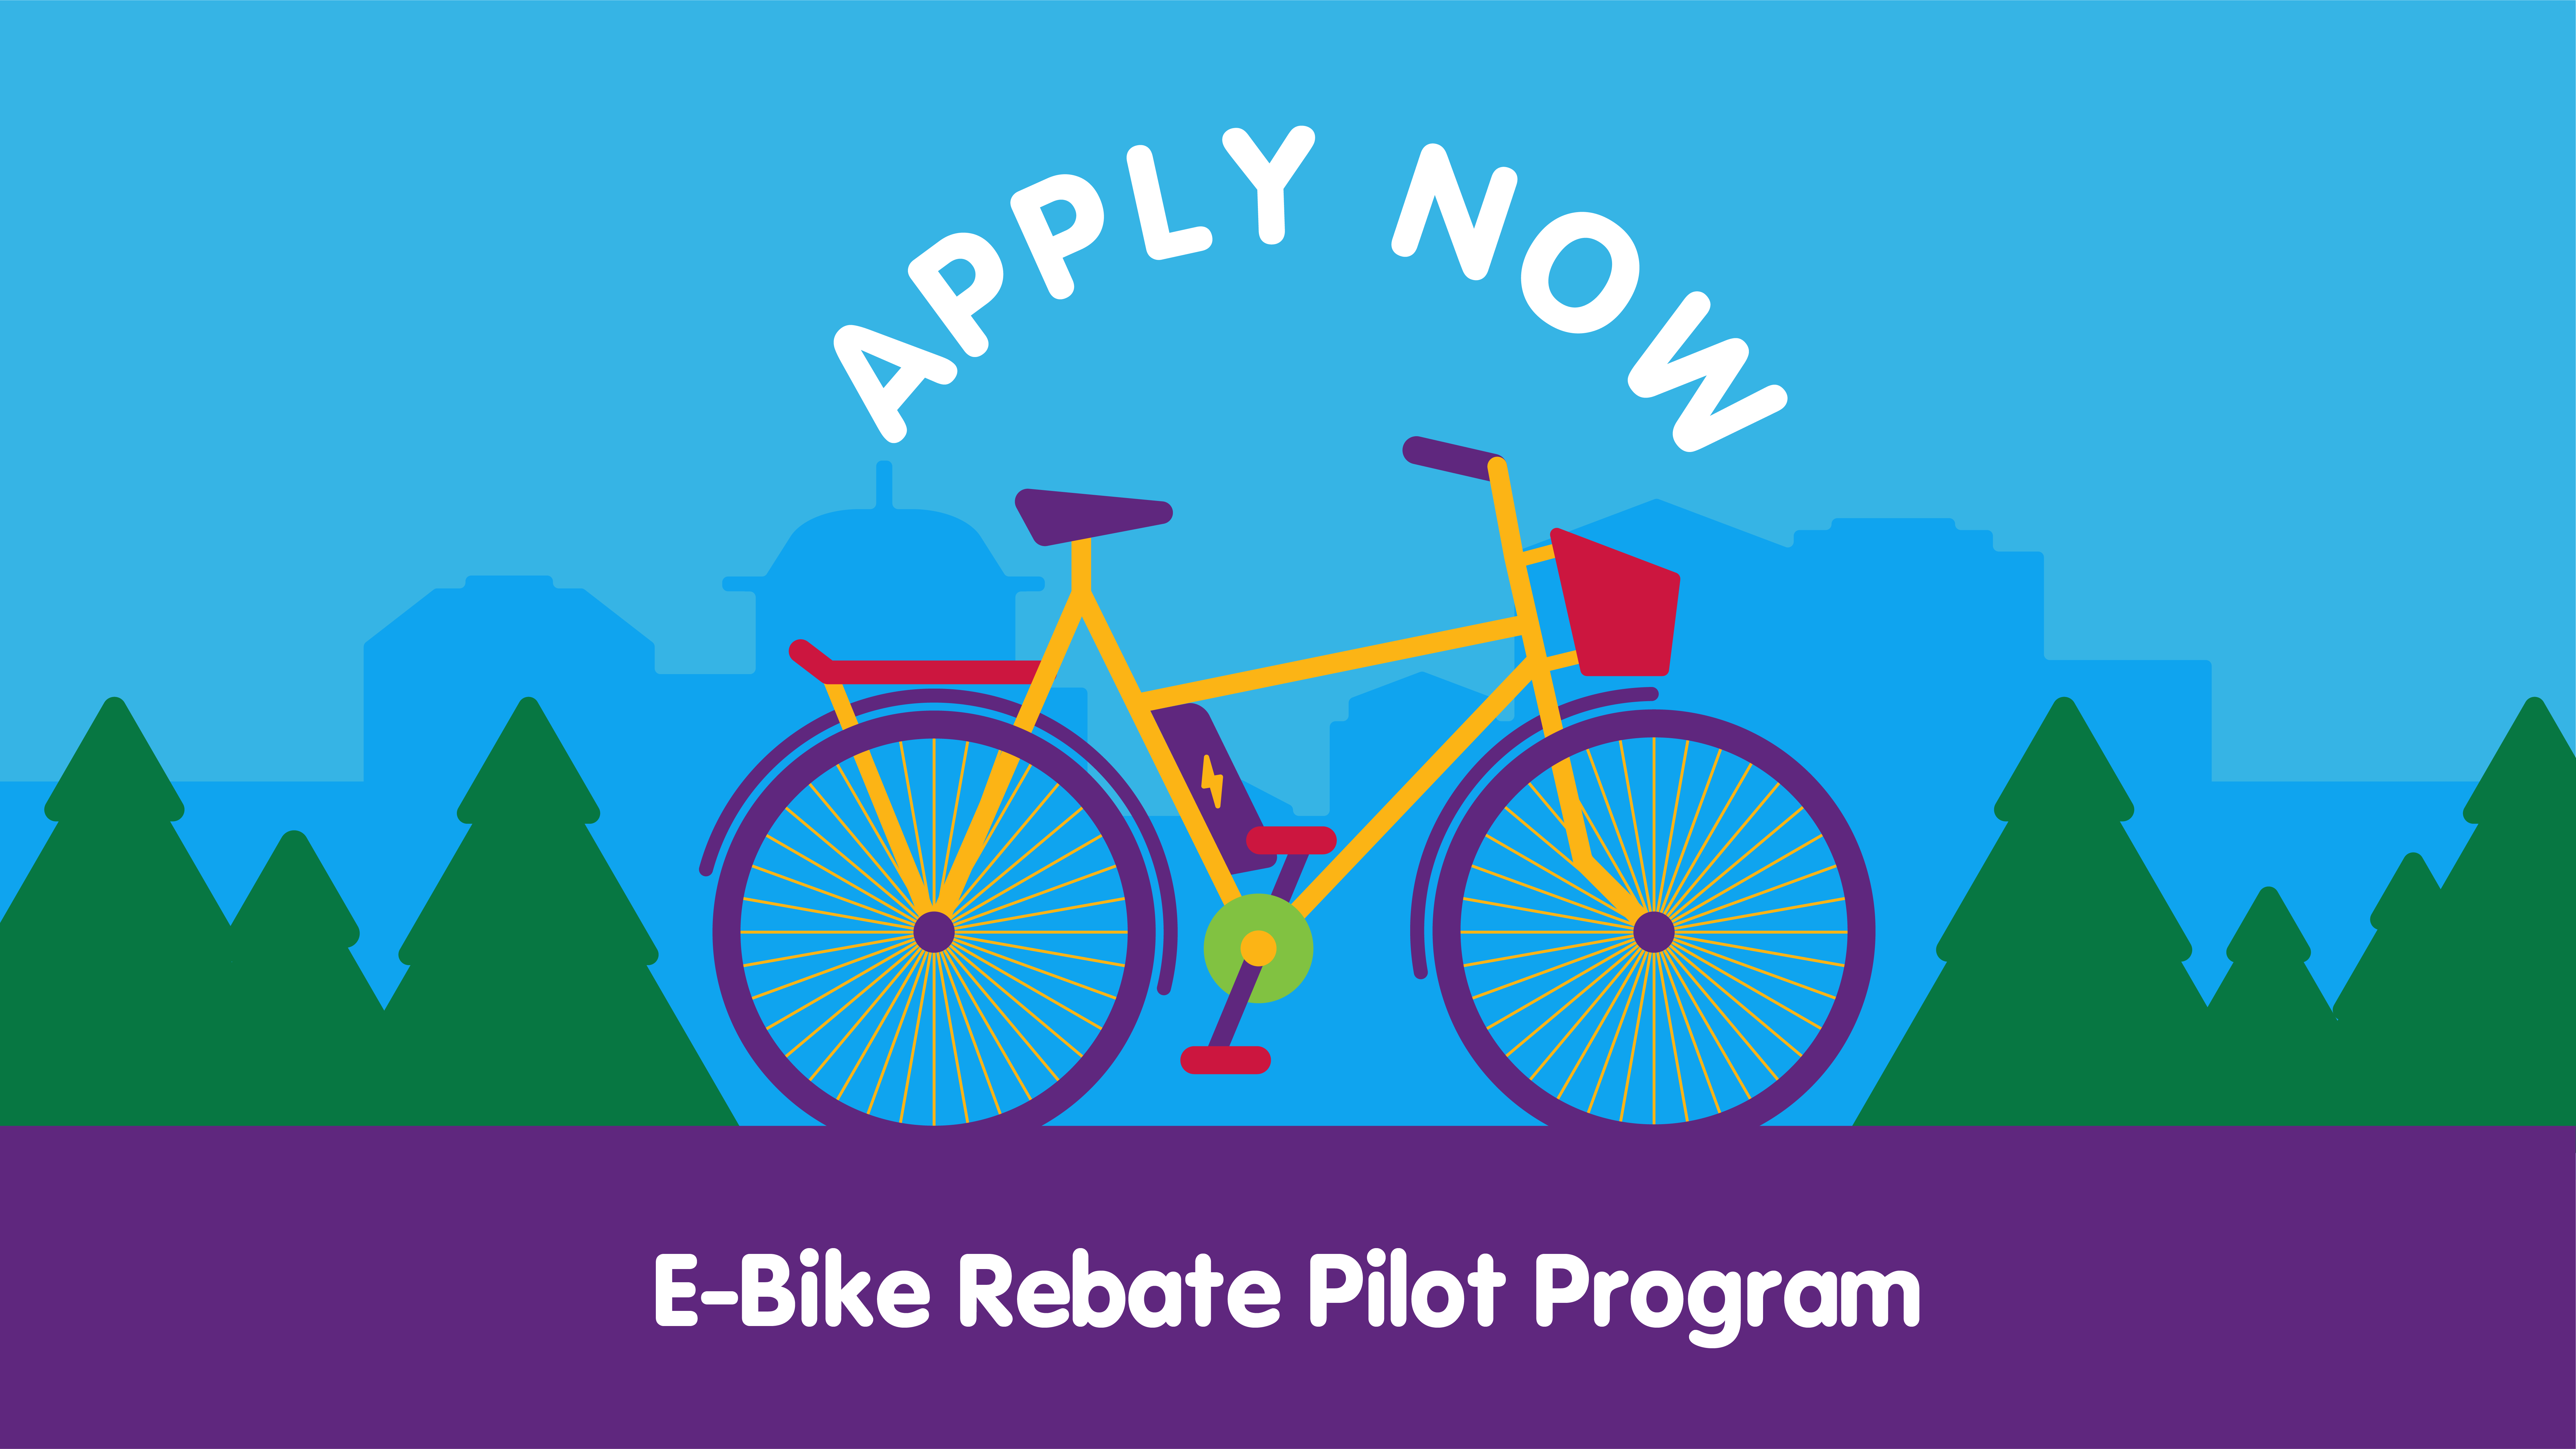 go-santa-cruz-announces-e-bike-rebate-pilot-program-event-santa-cruz